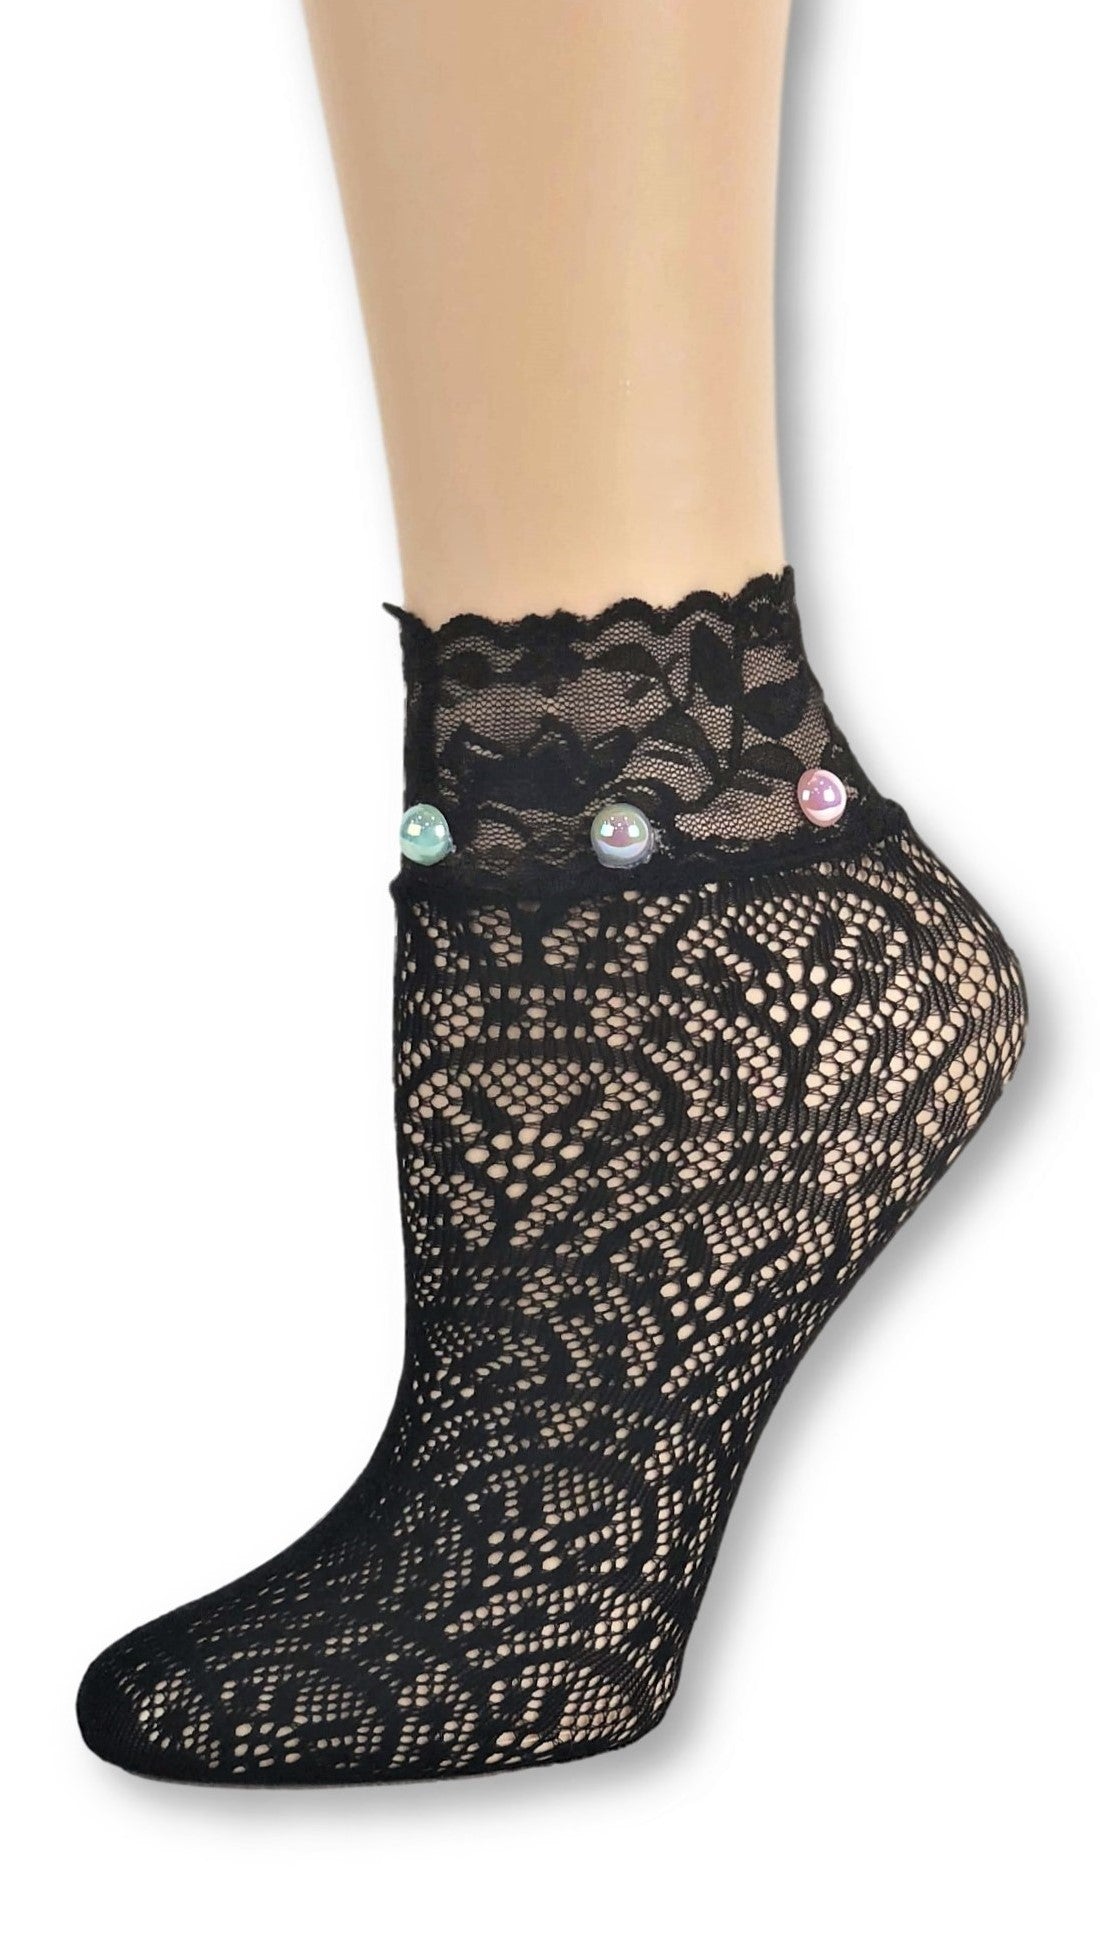 Tornado Black Custom Mesh Socks with beads